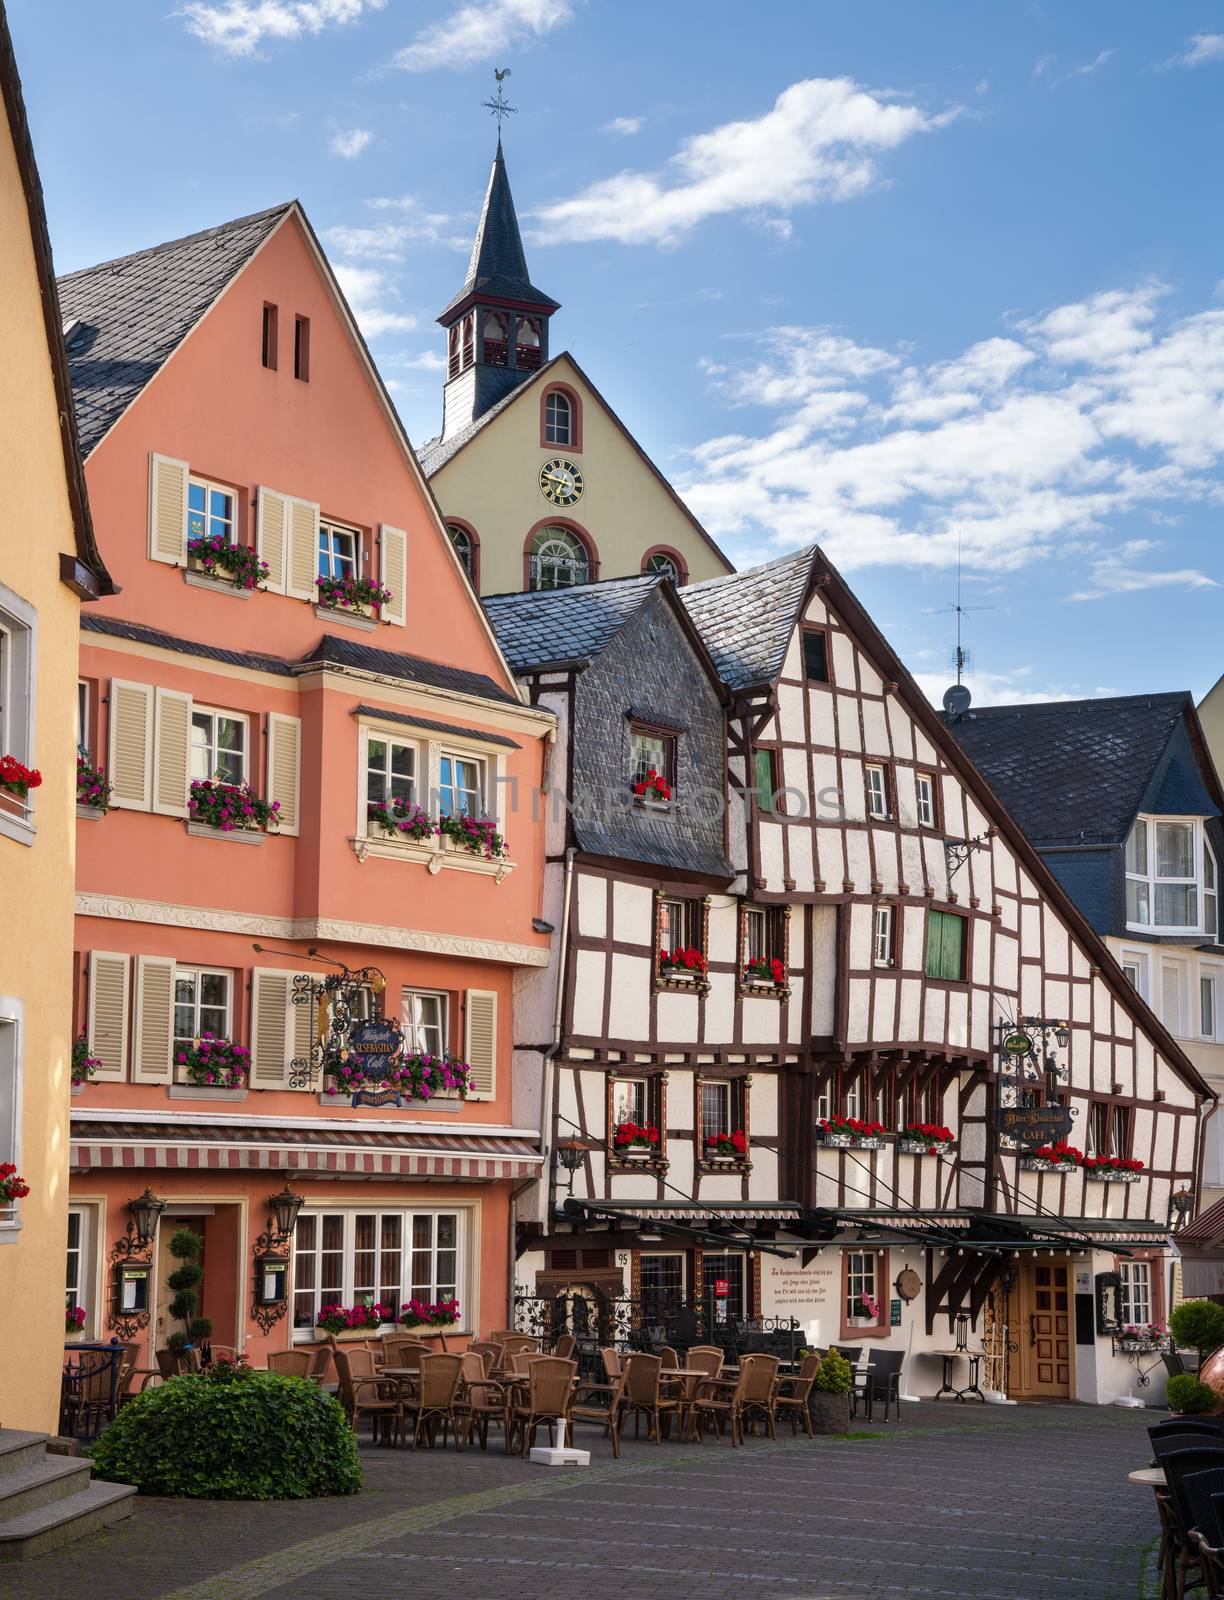 BERNKASTEL, GERMANY - JUNE 18, 2020: Old buildings in the historic city center of Bernkastel on June 18, 2020 in Germany